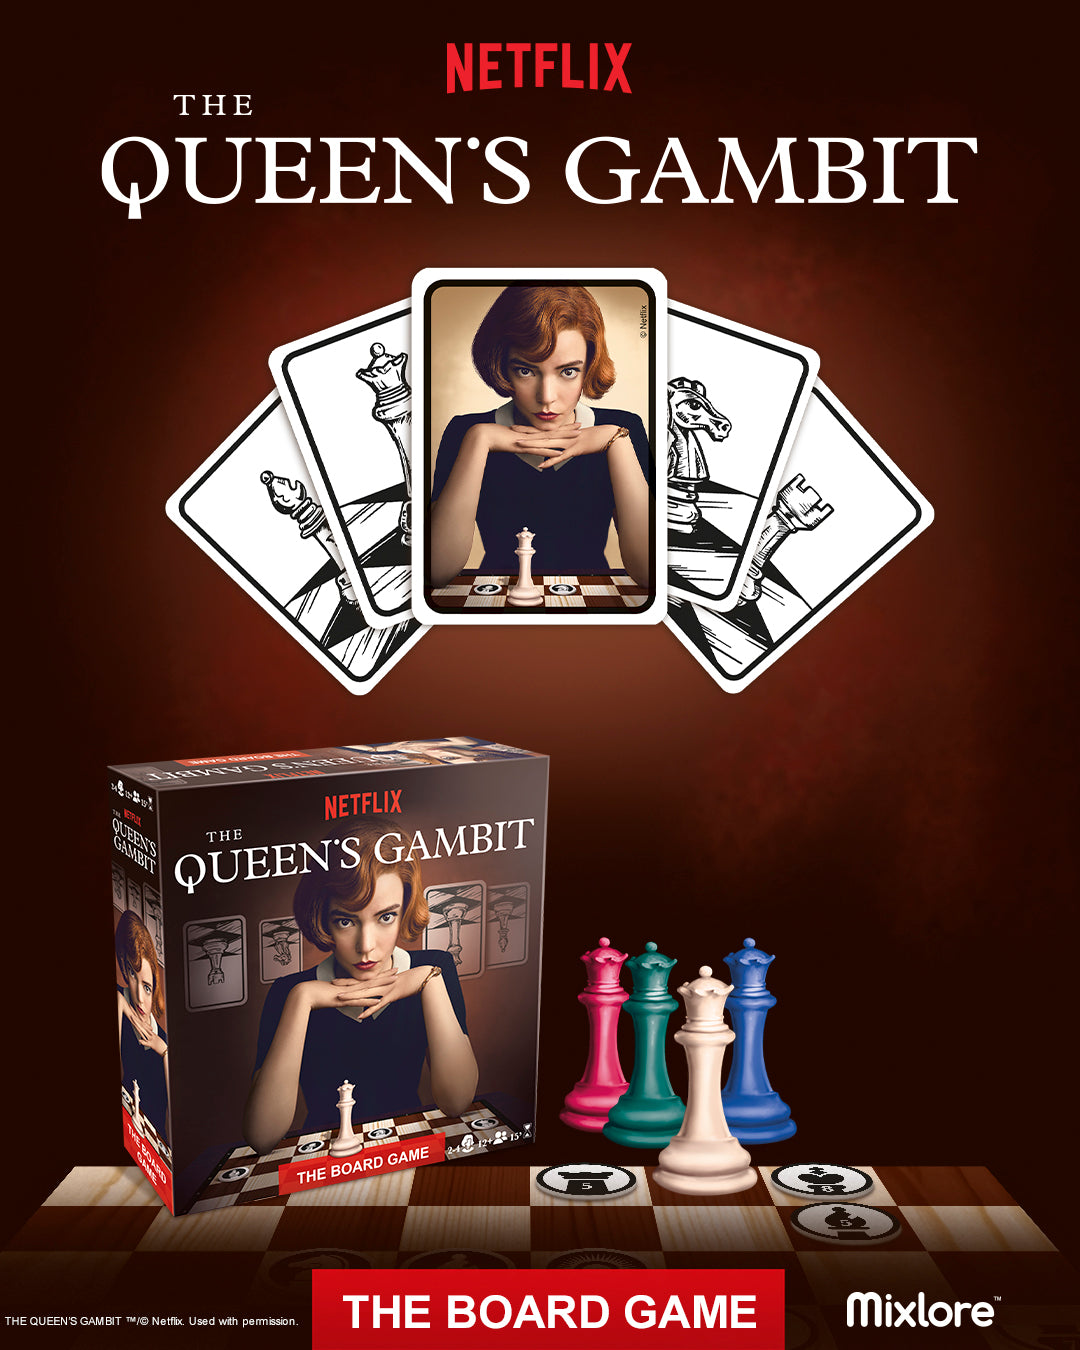 The Queen's Gambit Chess' Game Is Coming to Netflix - Netflix Tudum